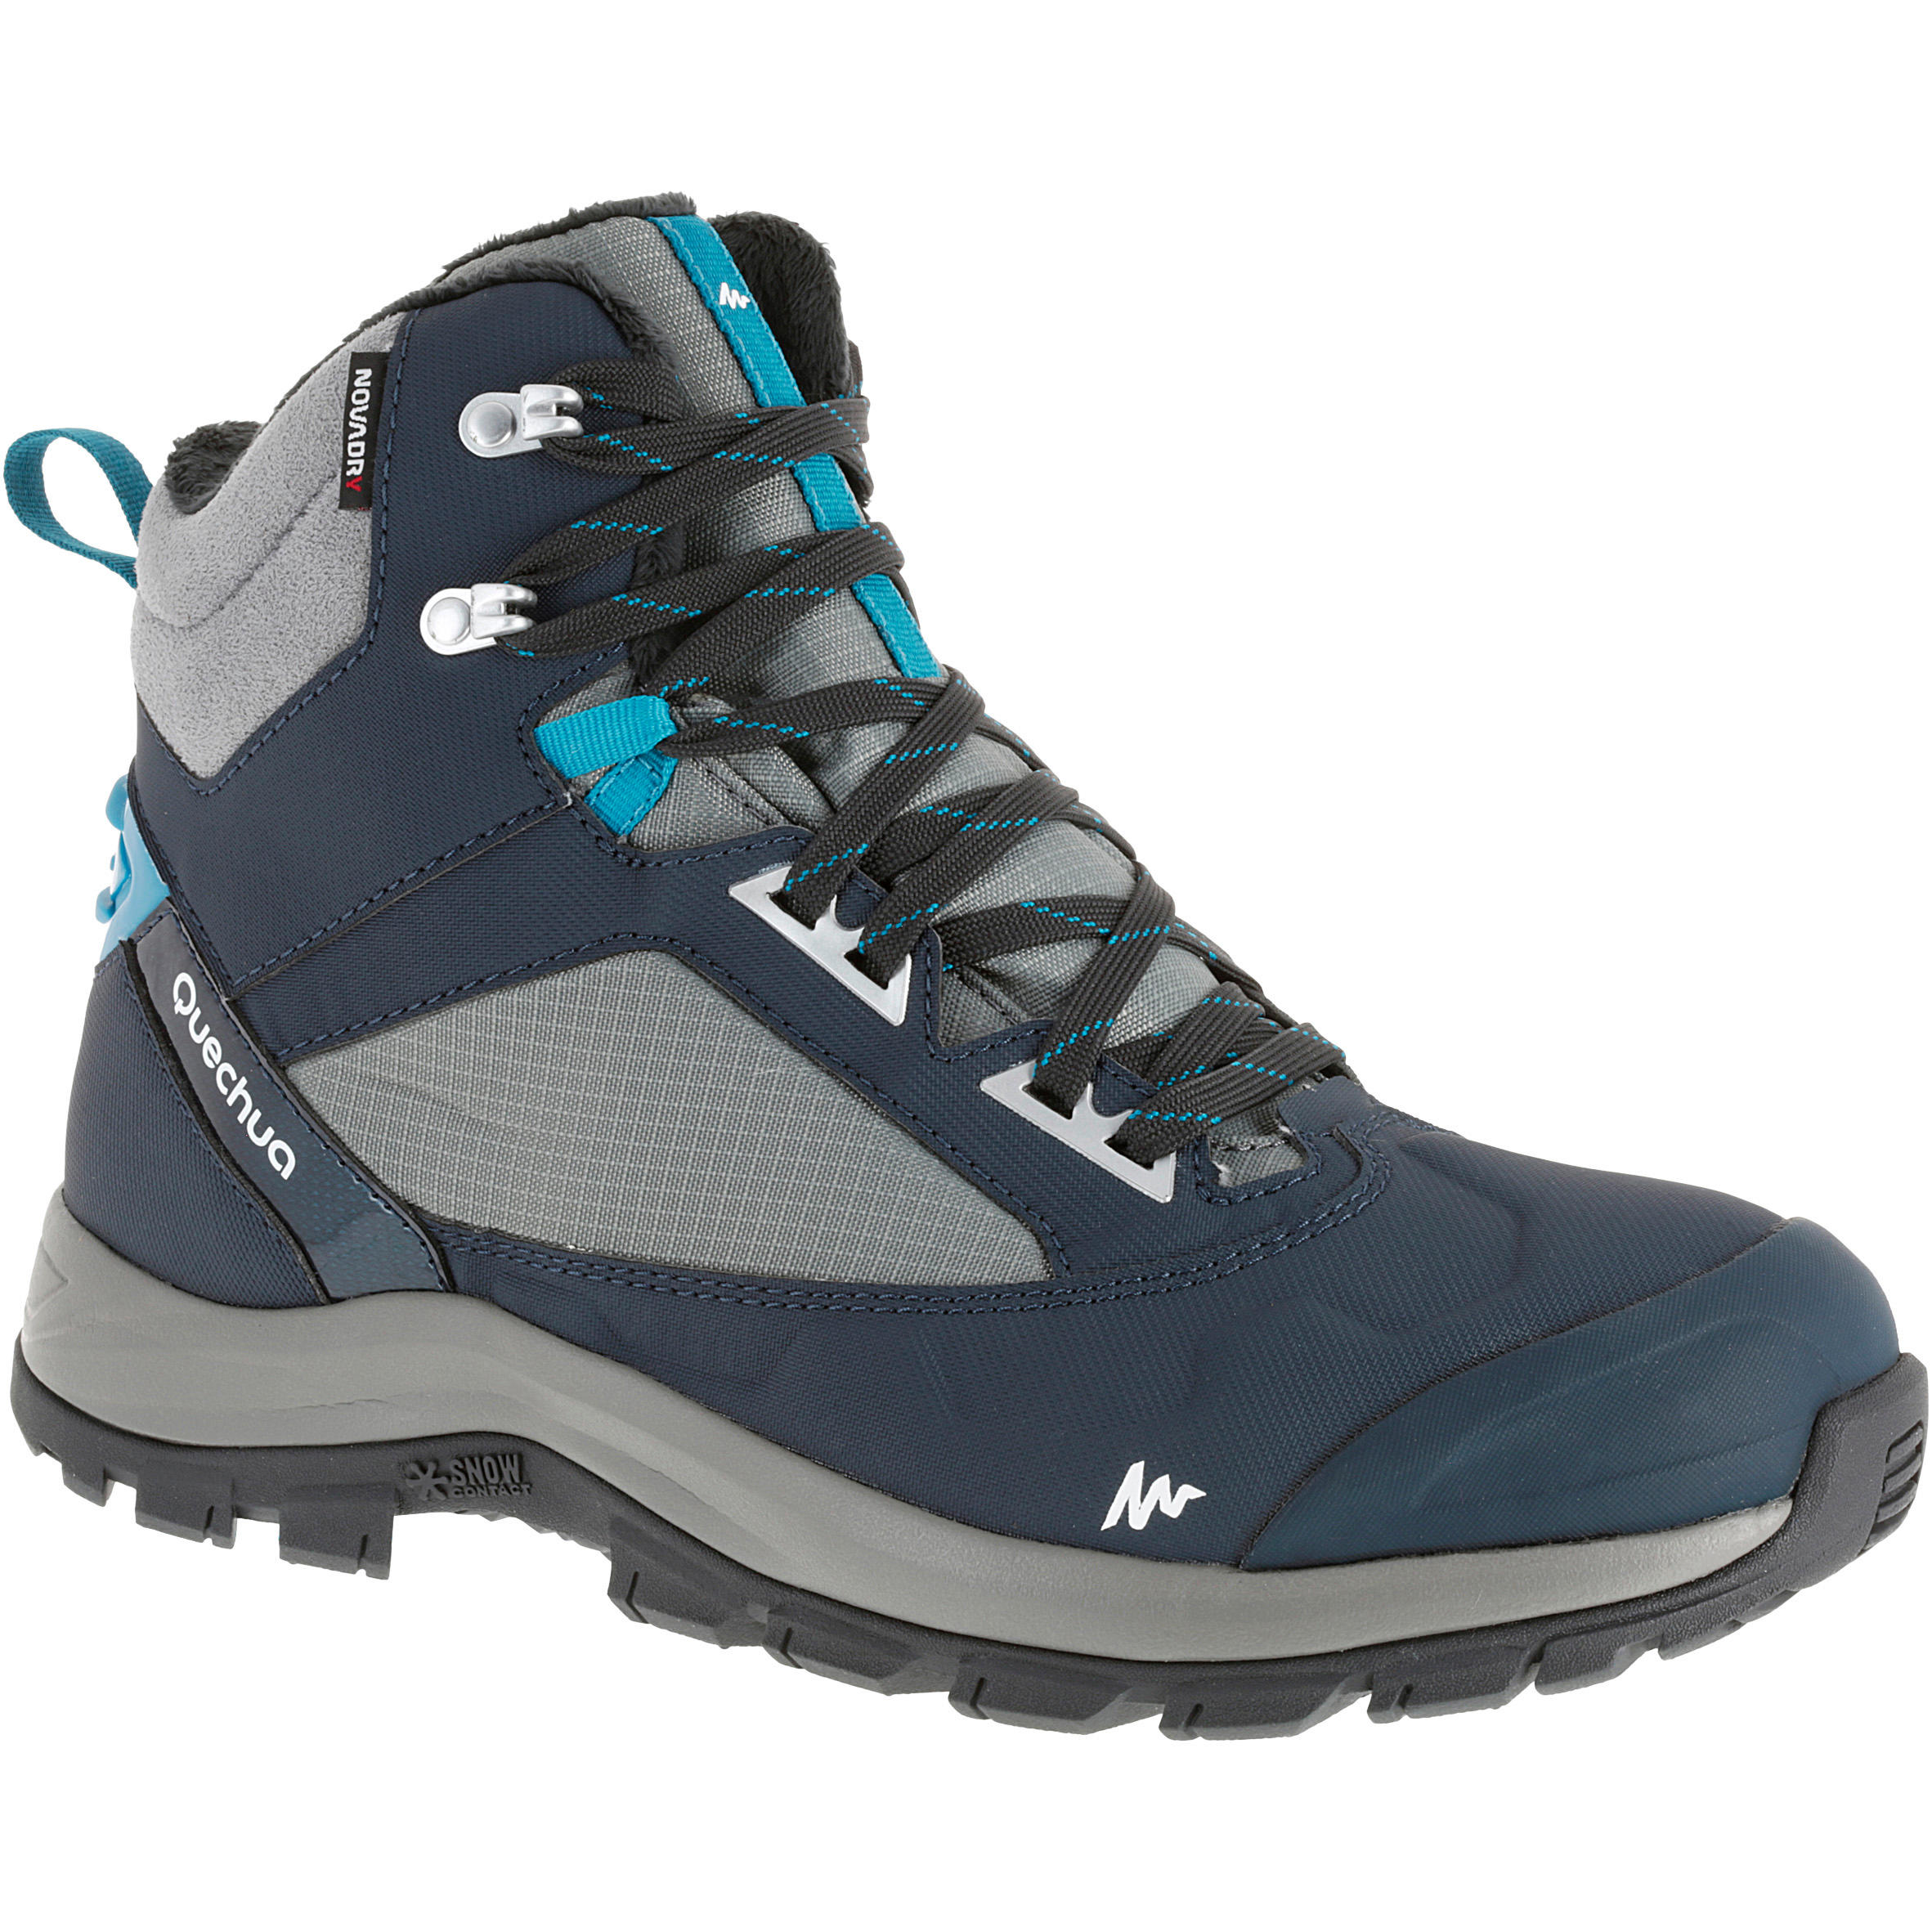 QUECHUA Forclaz 500 Warm Waterproof Men's Hiking Boots - Blue